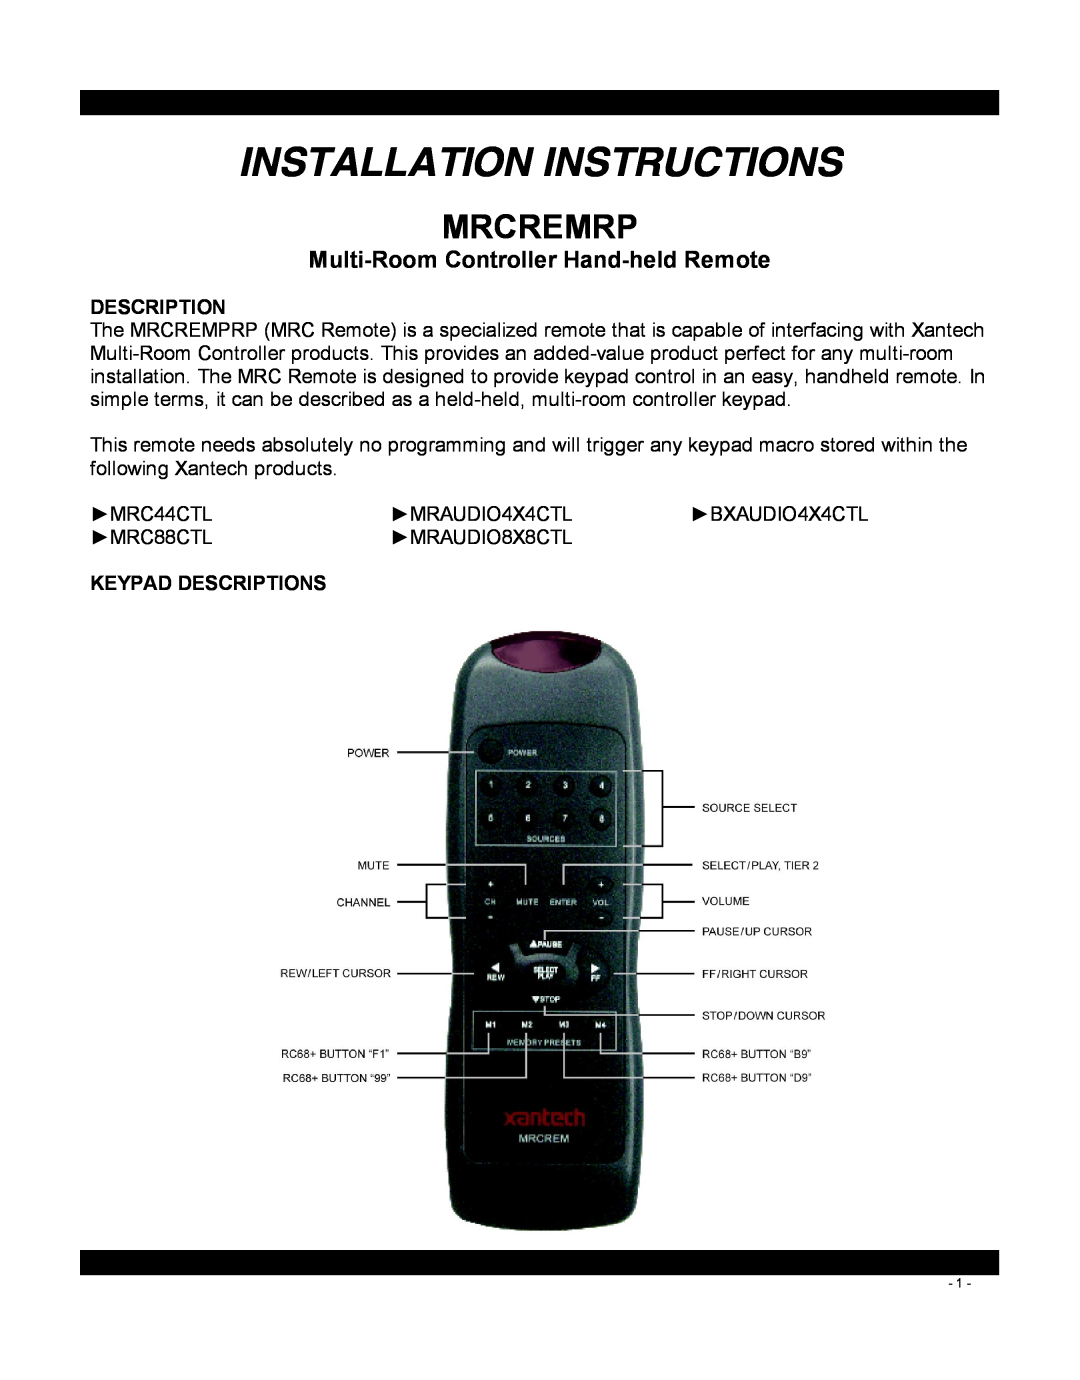 Xantech MRCREMRP installation instructions Keypad Descriptions, Installation Instructions, Mrcremrp 